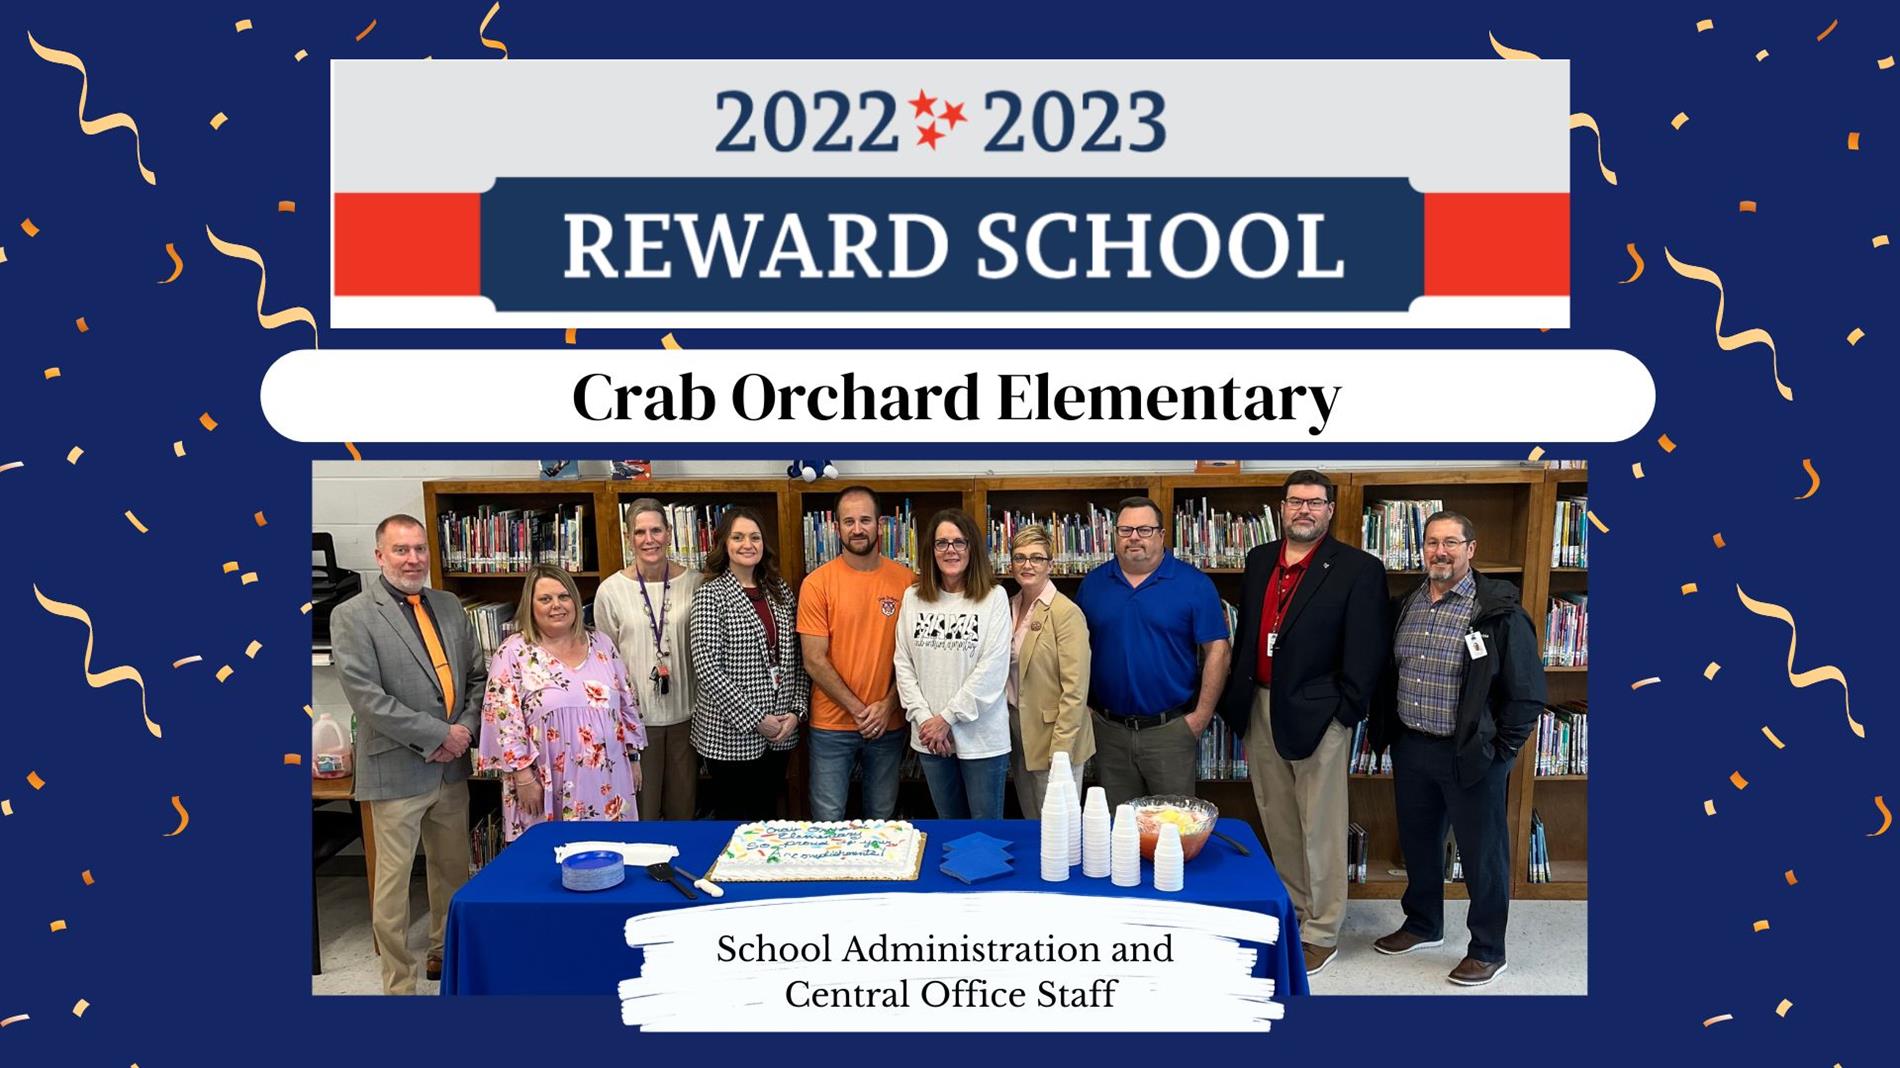 Crab Orchard Reward School image